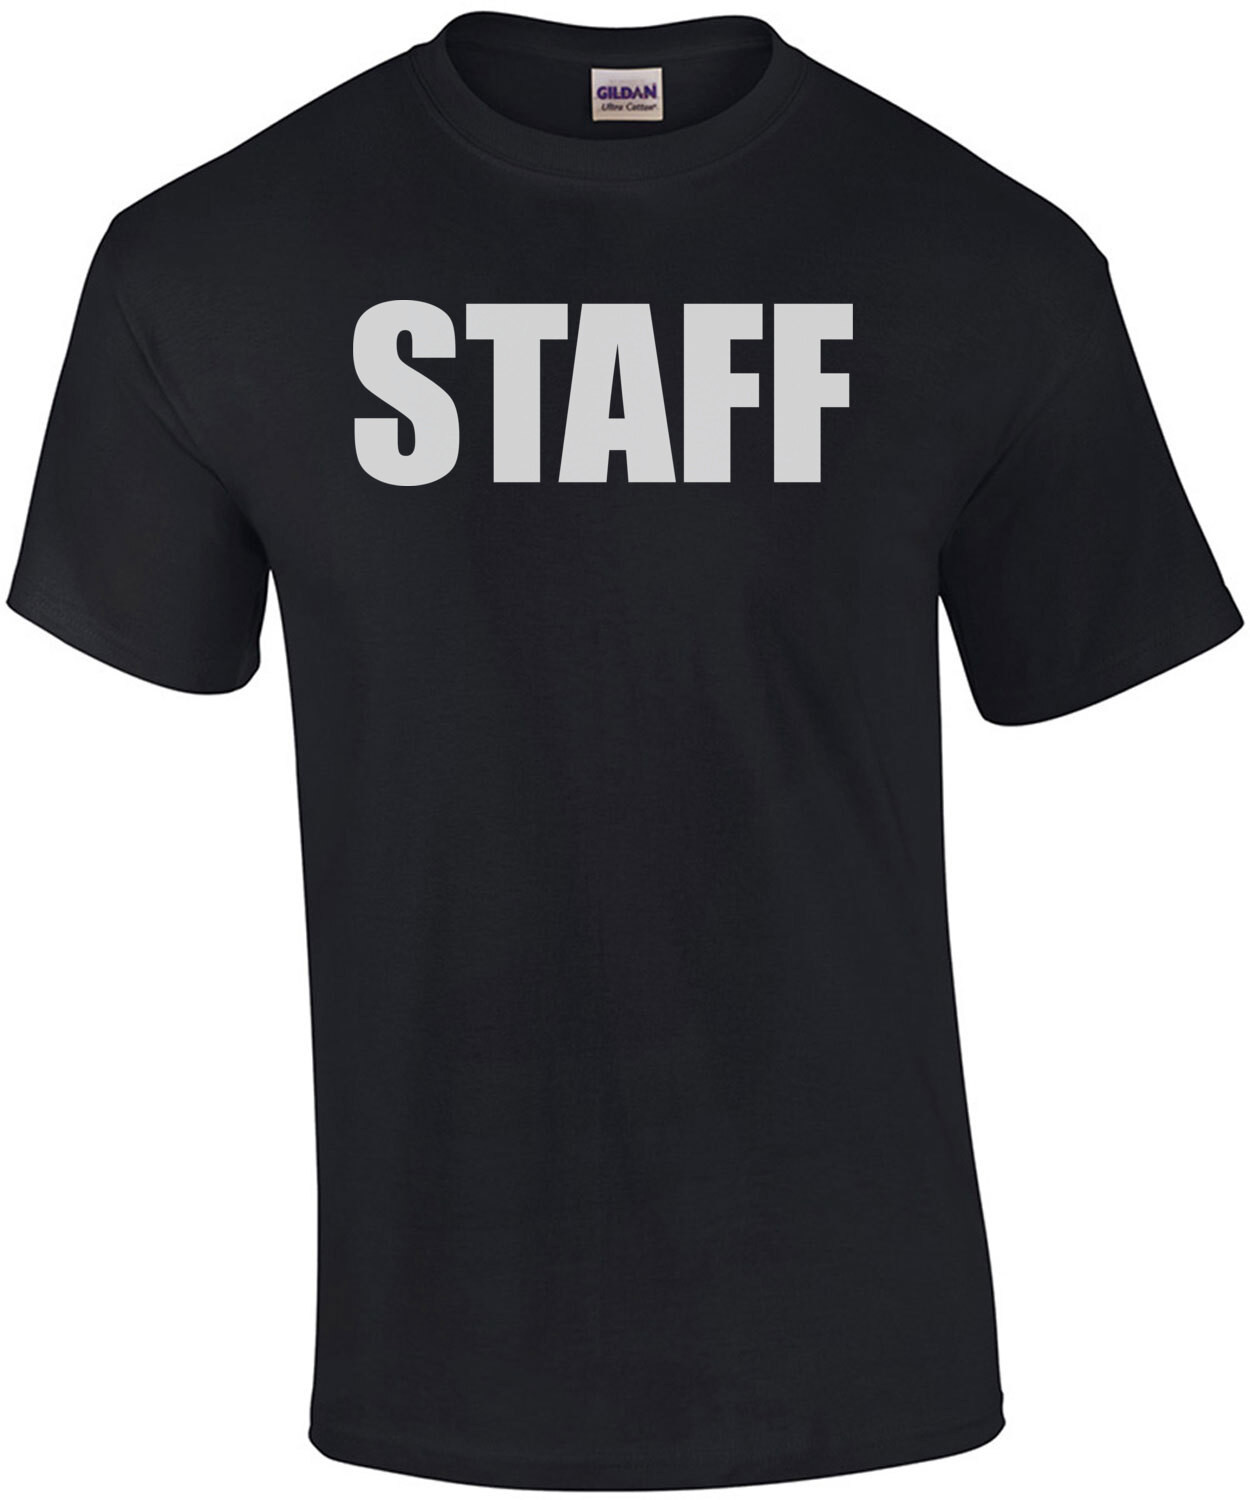 STAFF (White Text) T-Shirt